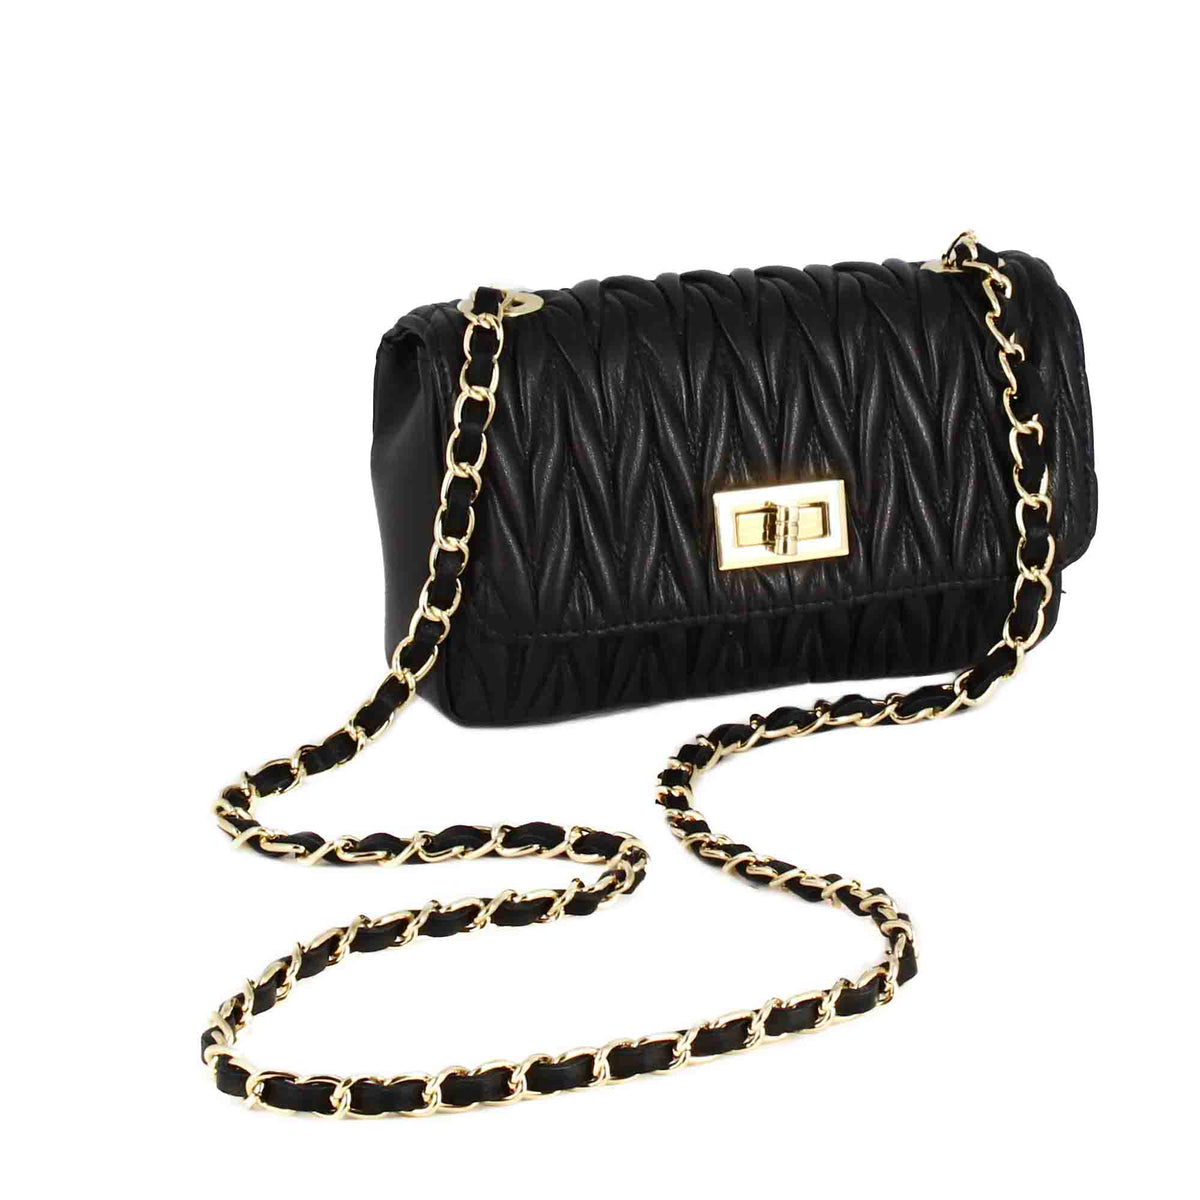 Women's handbag in black leather with jewel shoulder strap